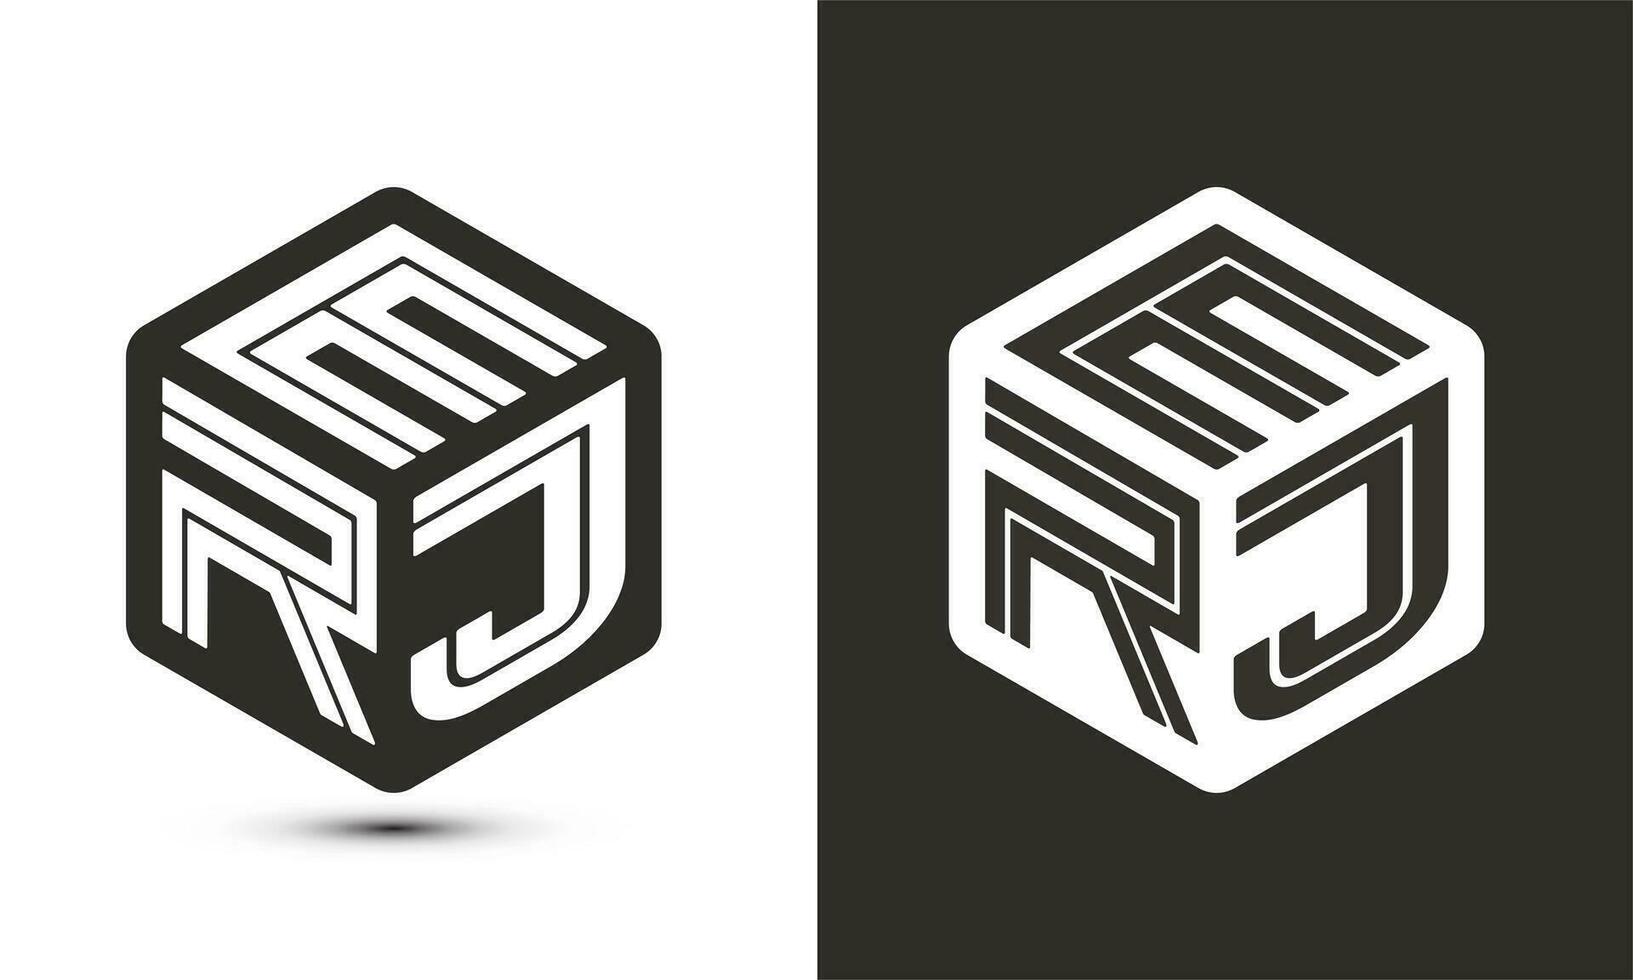 erj letra logo diseño con ilustrador cubo logo, vector logo moderno alfabeto fuente superposición estilo.